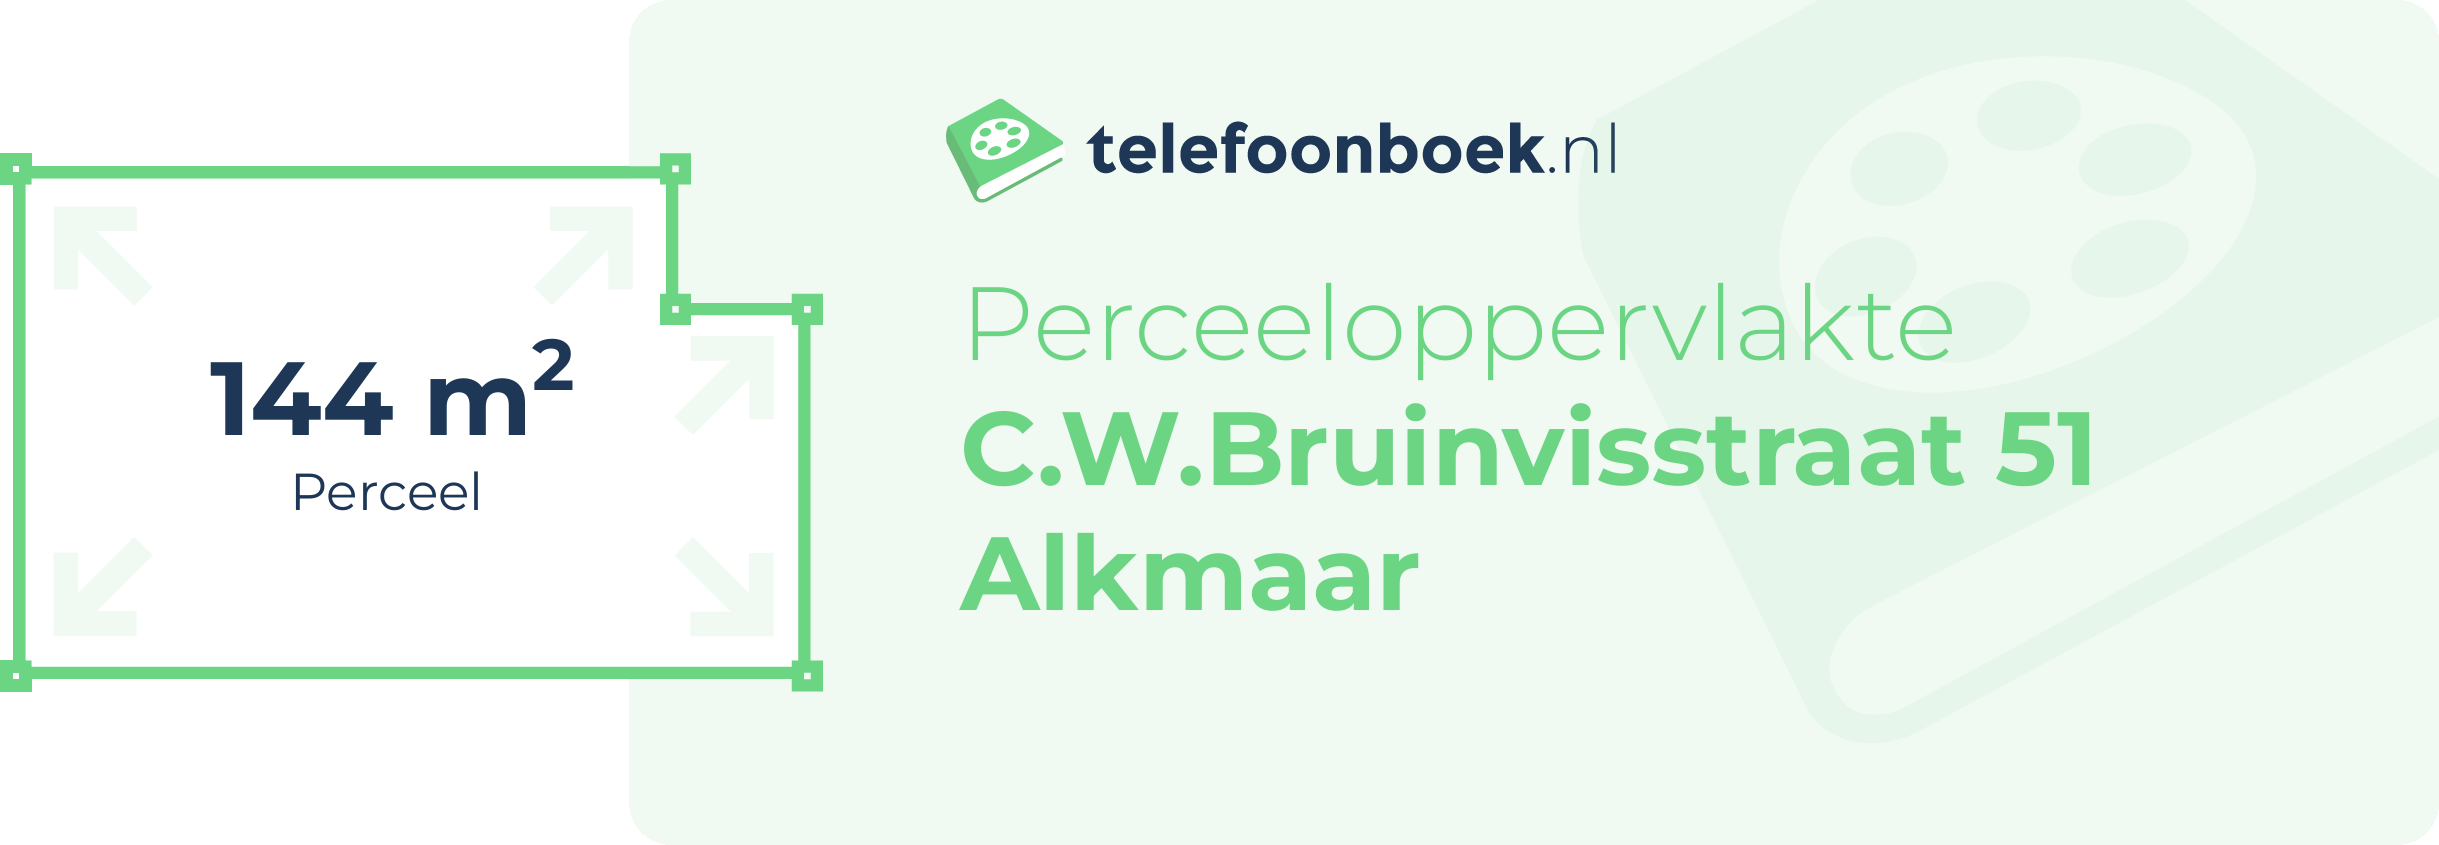 Perceeloppervlakte C.W.Bruinvisstraat 51 Alkmaar